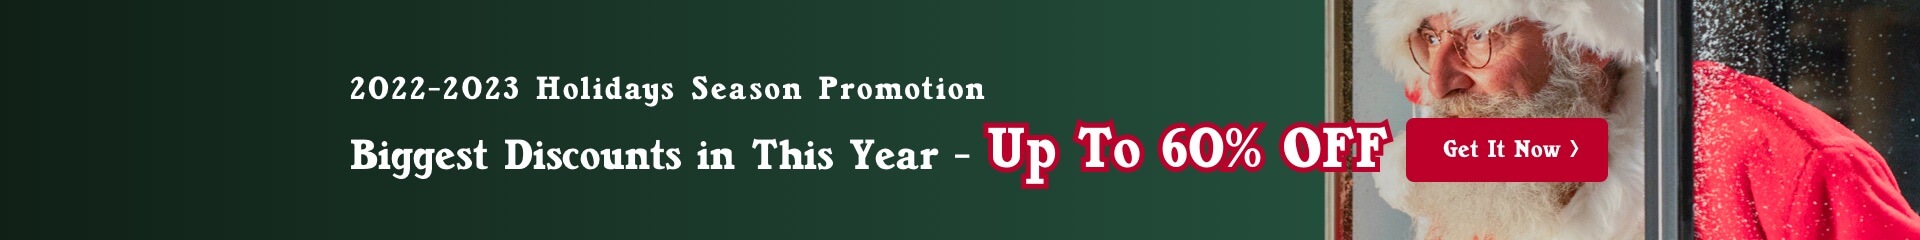 2022-2023 Holidays Season Promotion